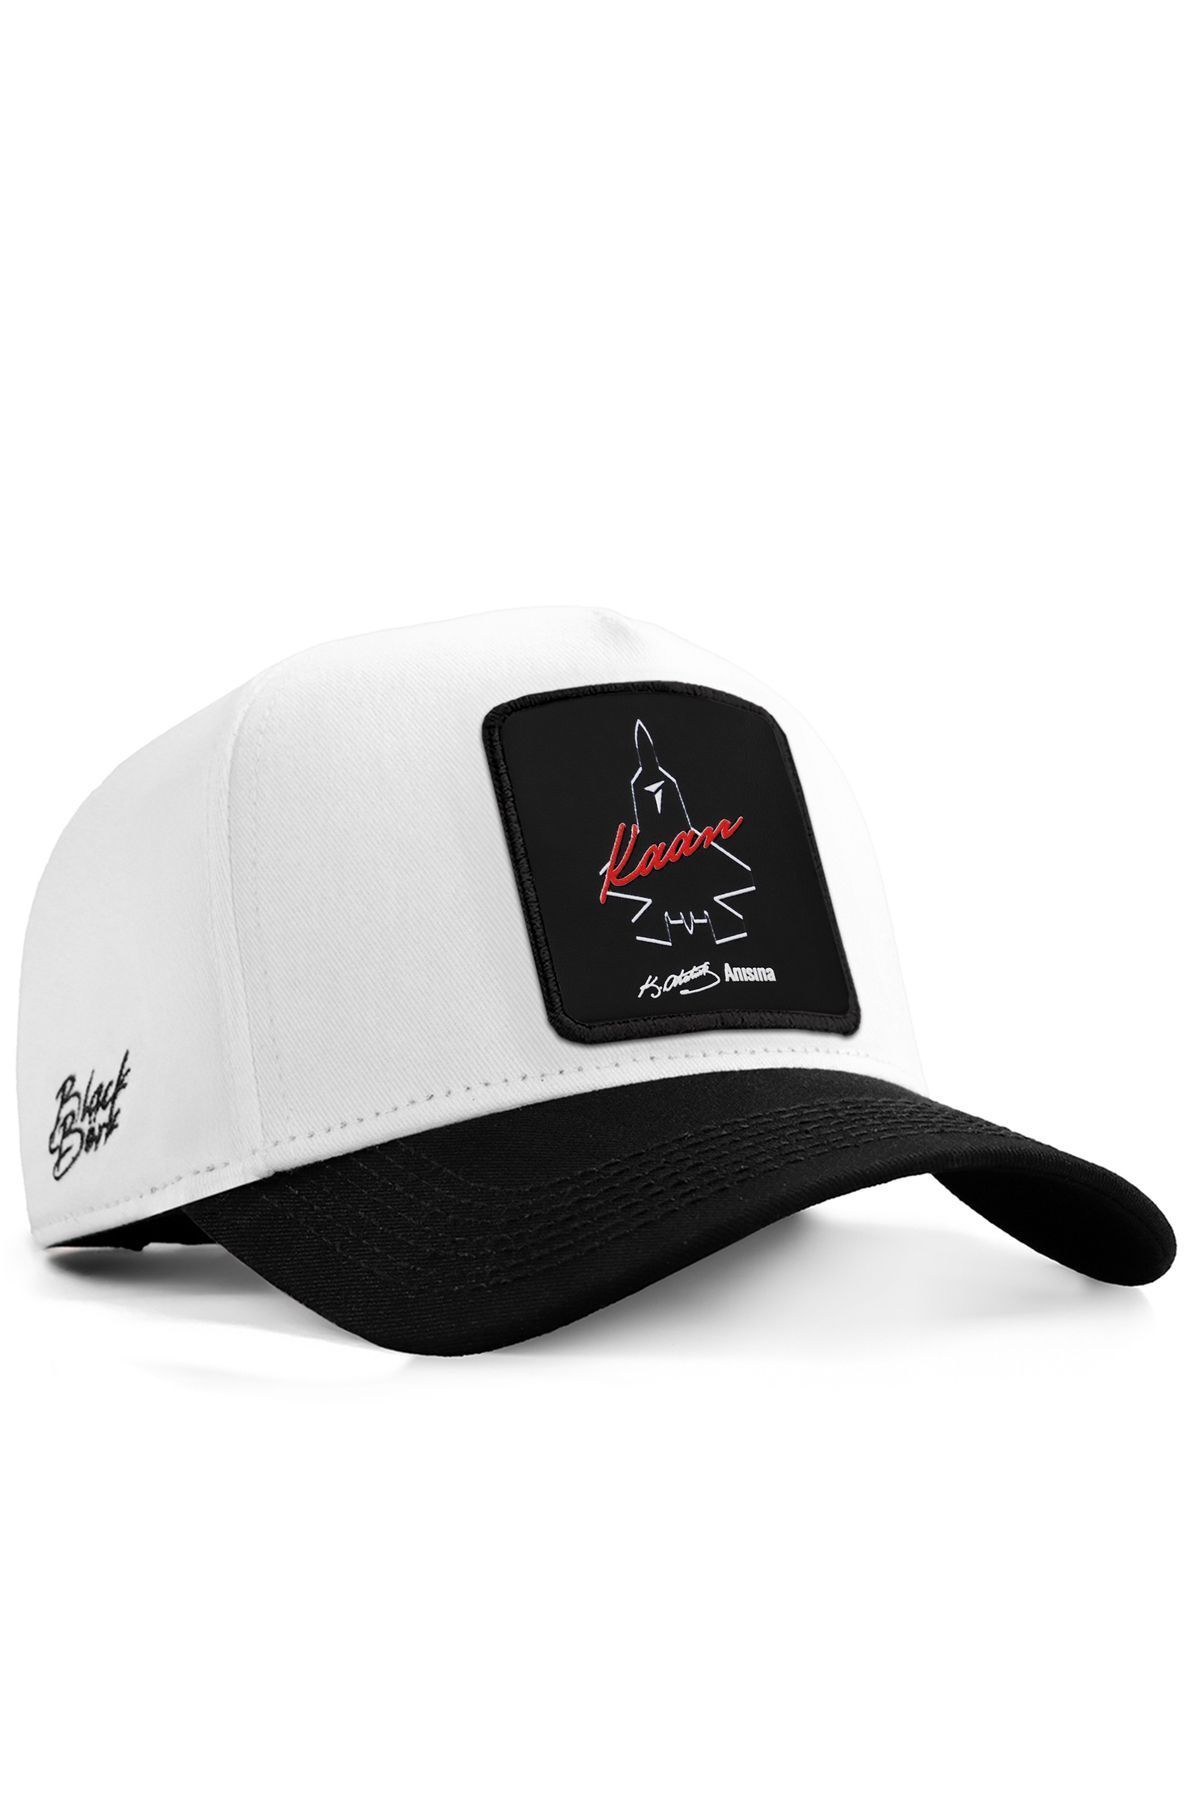 BlackBörk V1 Baseball Saygı - 2 Kaan Lisanlı Beyaz-siyah Siperli Şapka